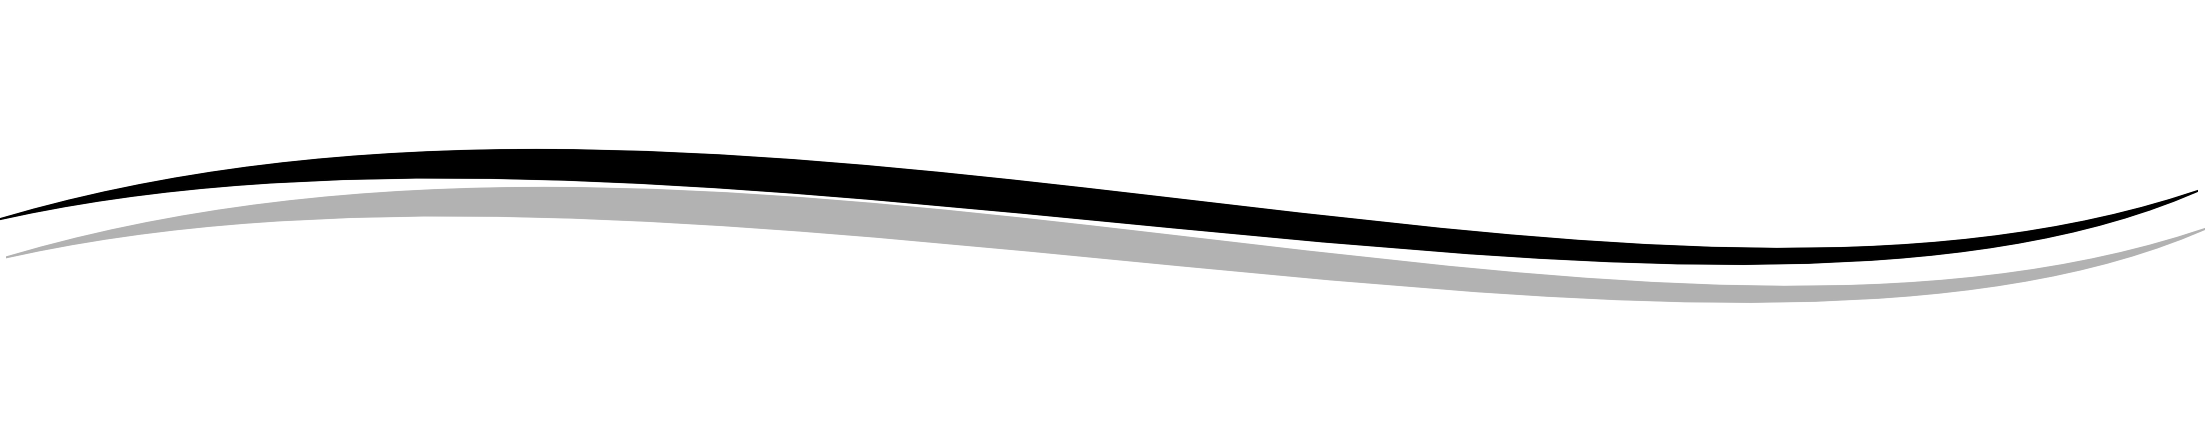 Line clipart line segment. Divider 